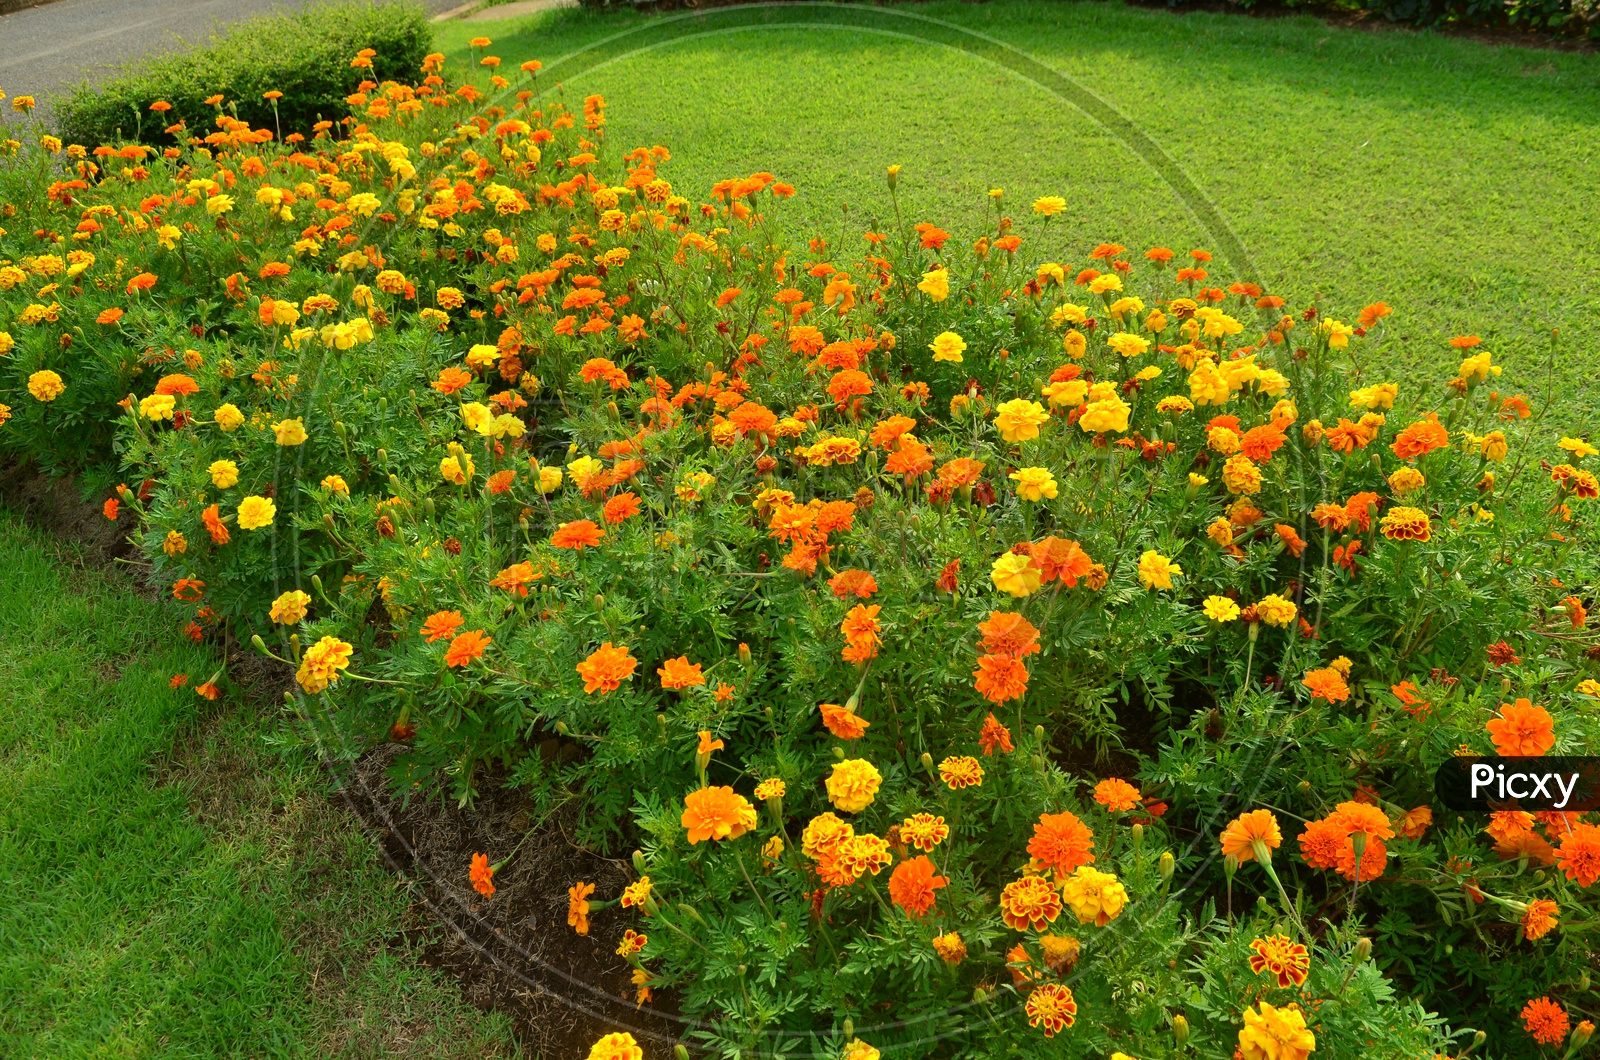 Marigold Flowers on Plants  in a Garden